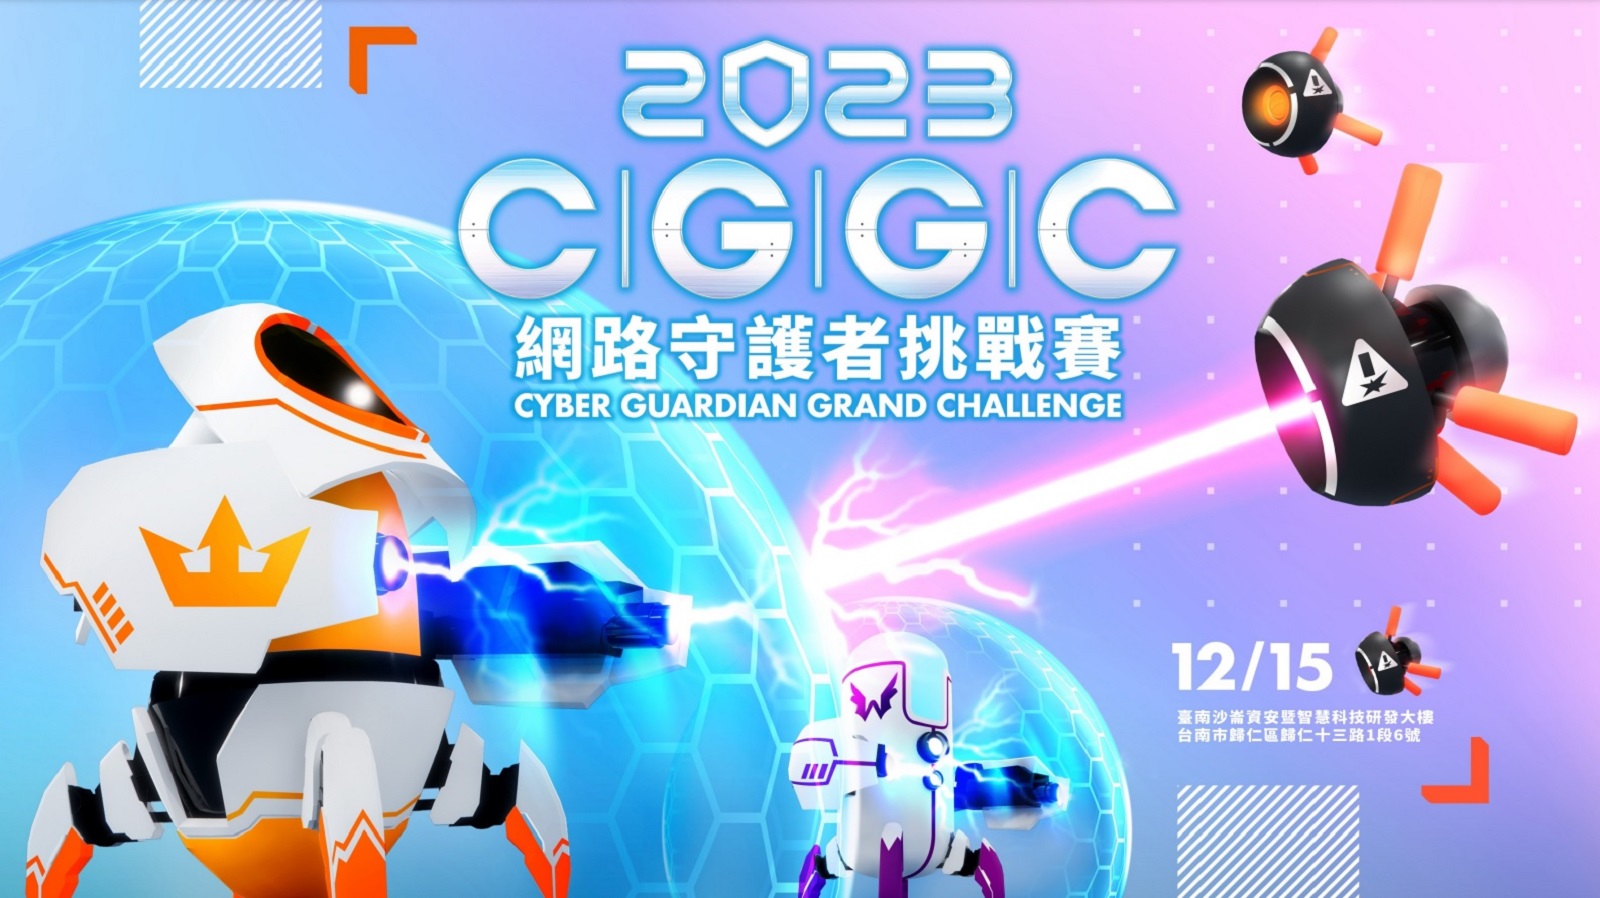 2023 CGGC 網路守護者挑戰賽主視覺